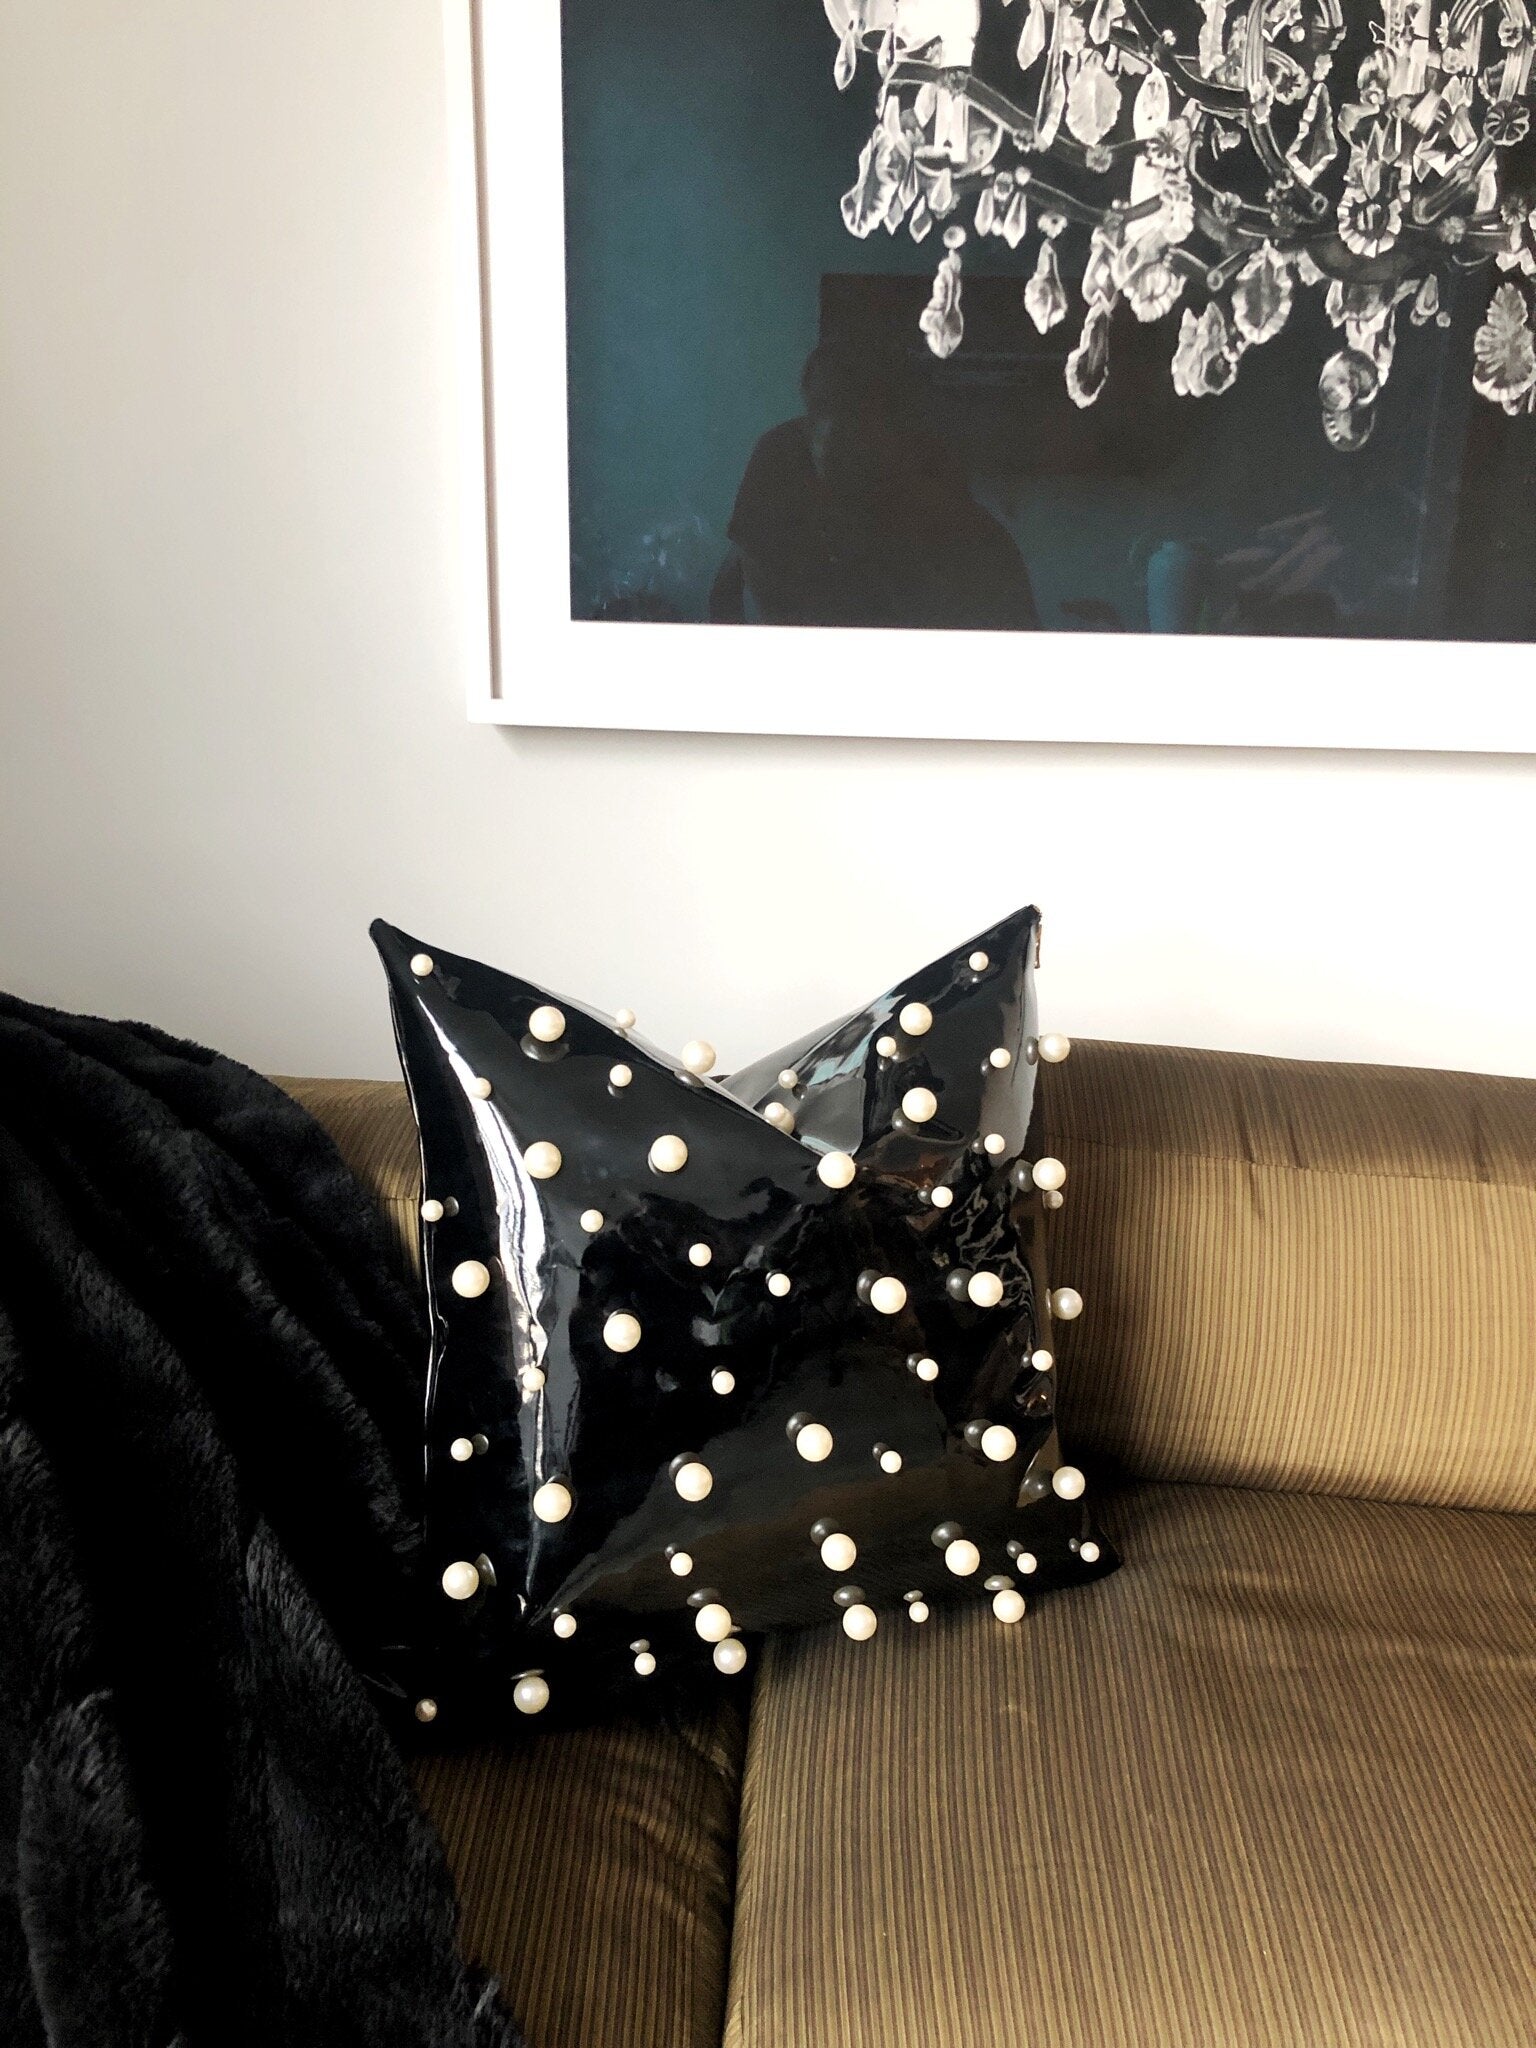 TEXXXTURE LEATHER FRINGE PILLOW – Stud Pillows